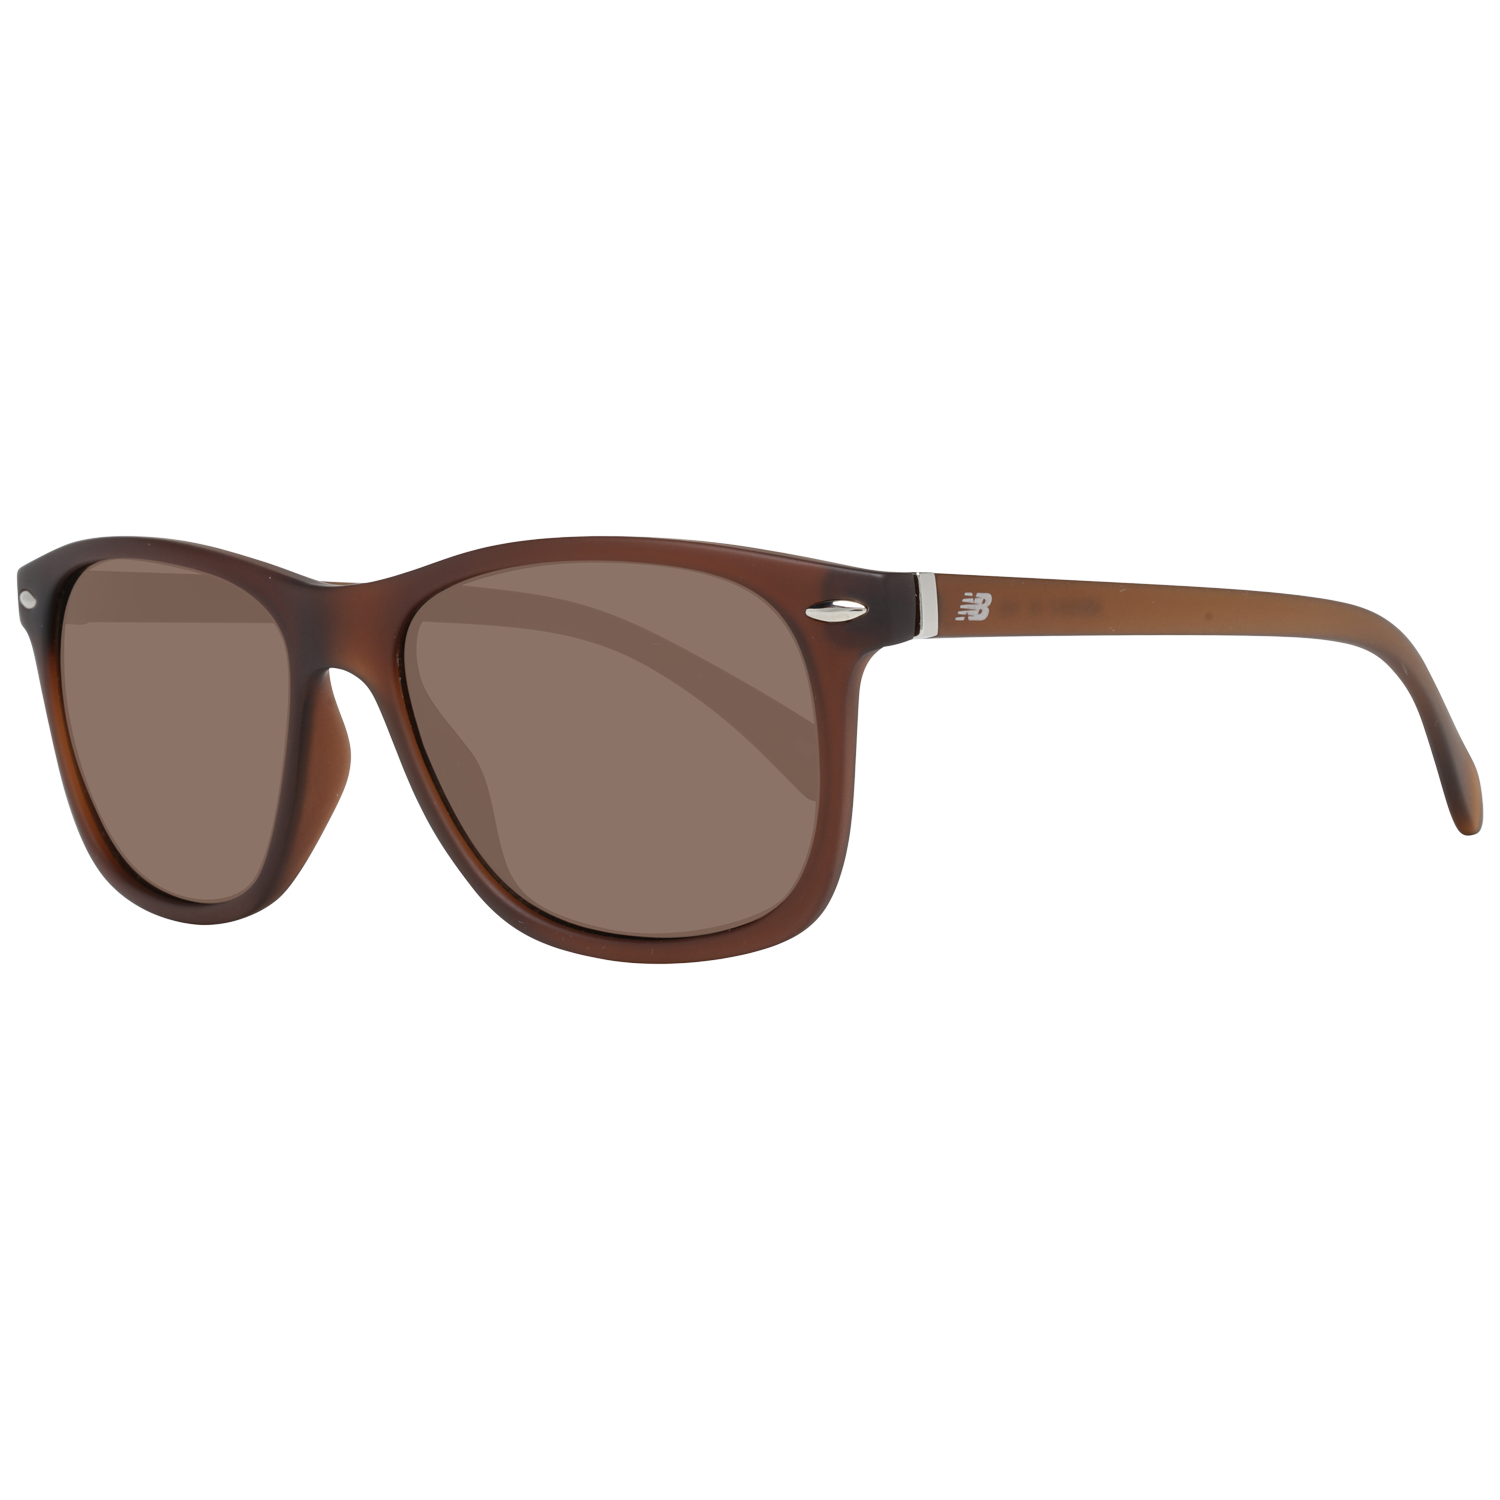 New Balance Sunglasses NB6280 C02 54 Brown